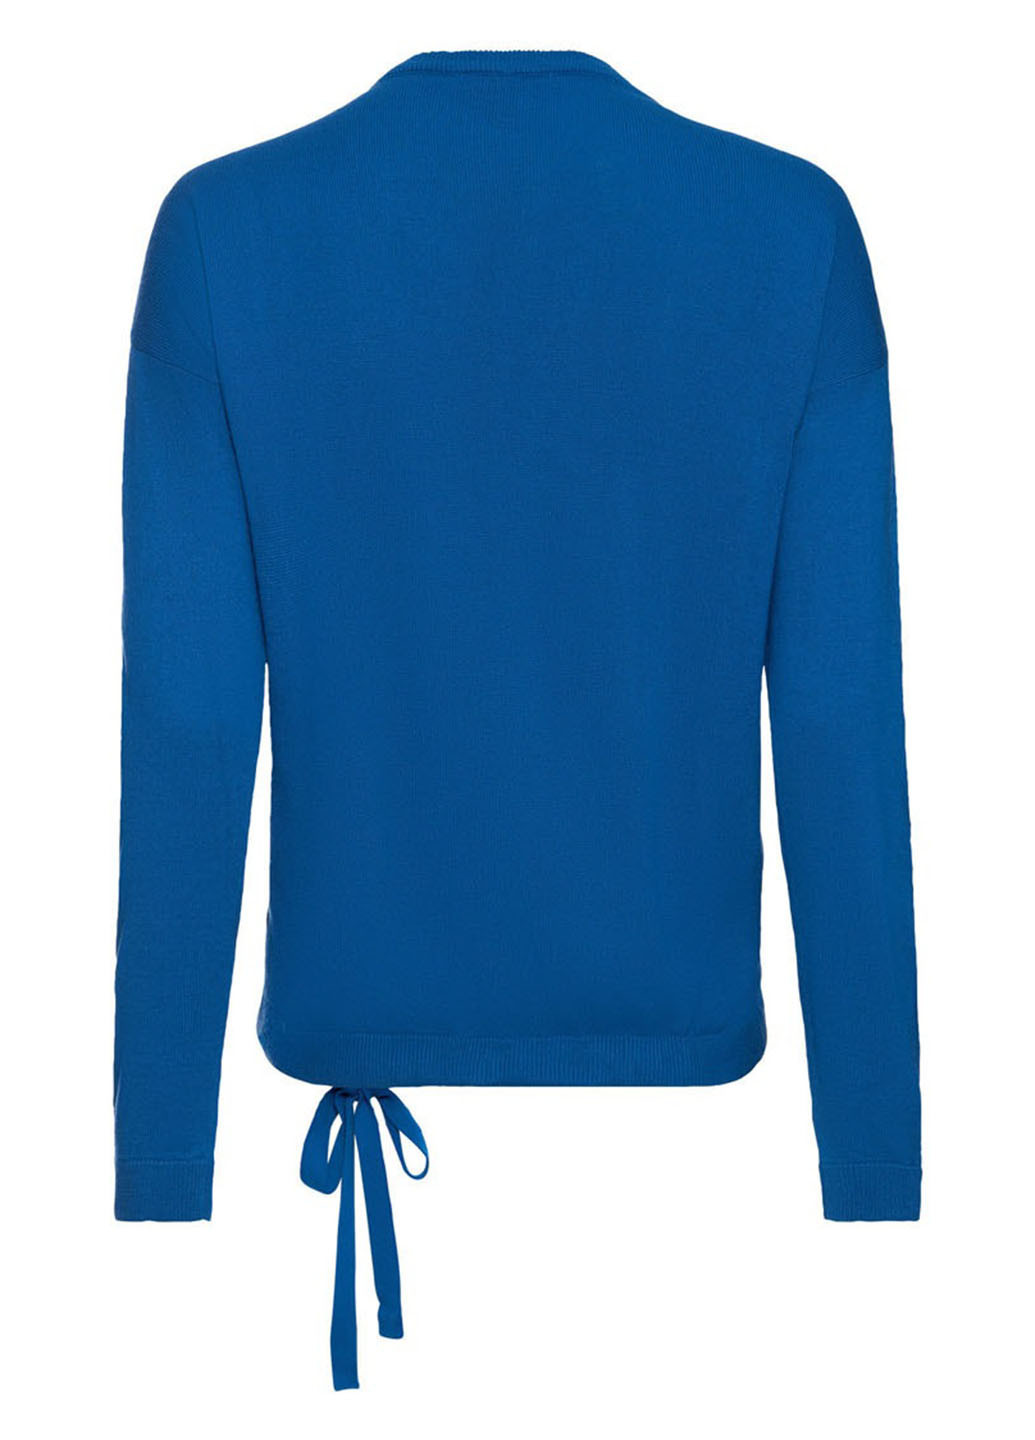 Синий демисезонный свитер пуловер Esmara